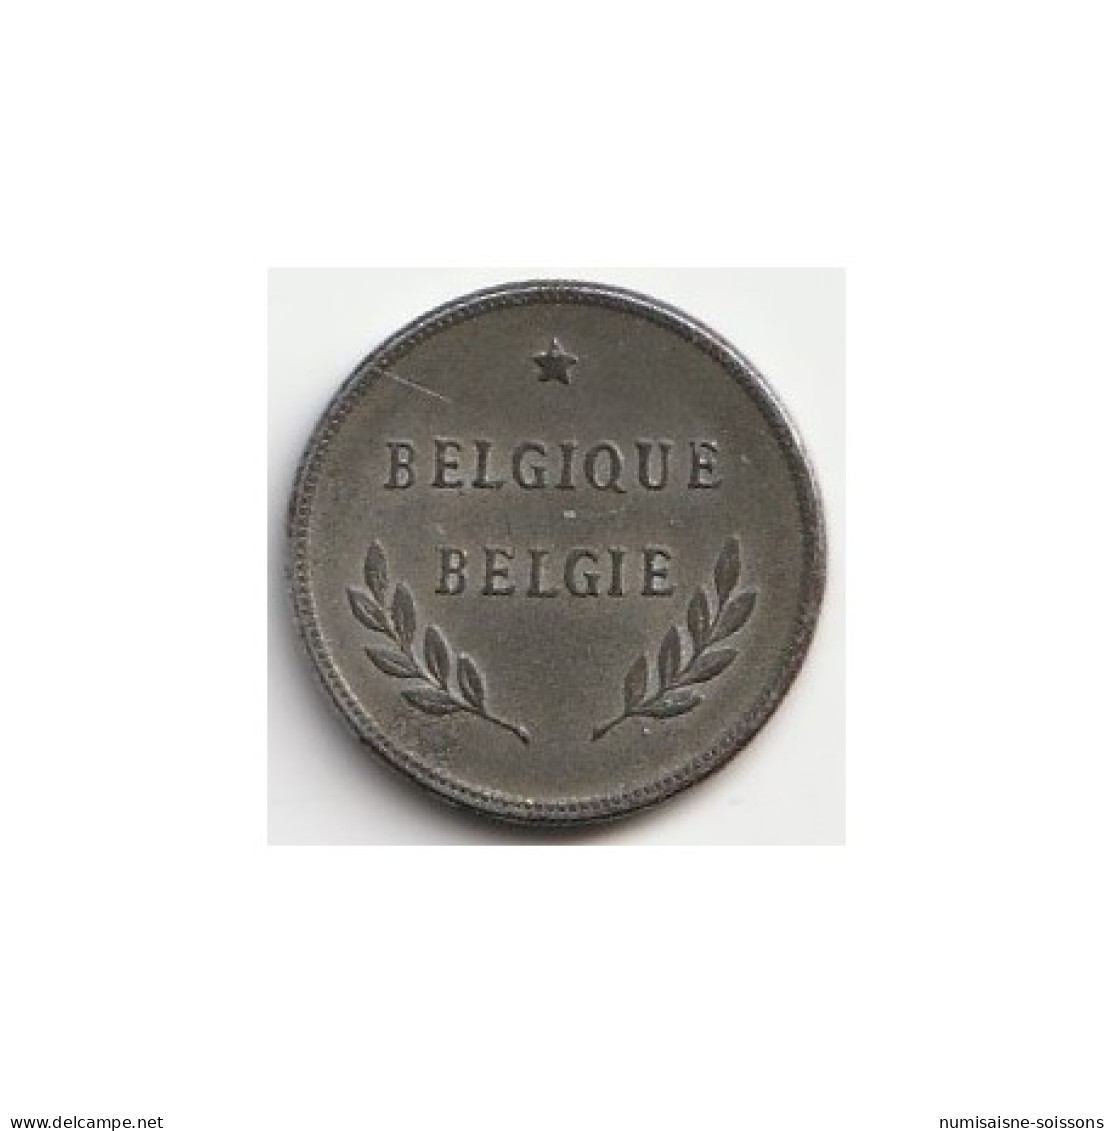 BELGIQUE - KM 133 - 2 FRANCS 1944 - TYPE LIBÉRATION - LÉOPOLD III - SPL - 2 Francs (1944 Liberation)